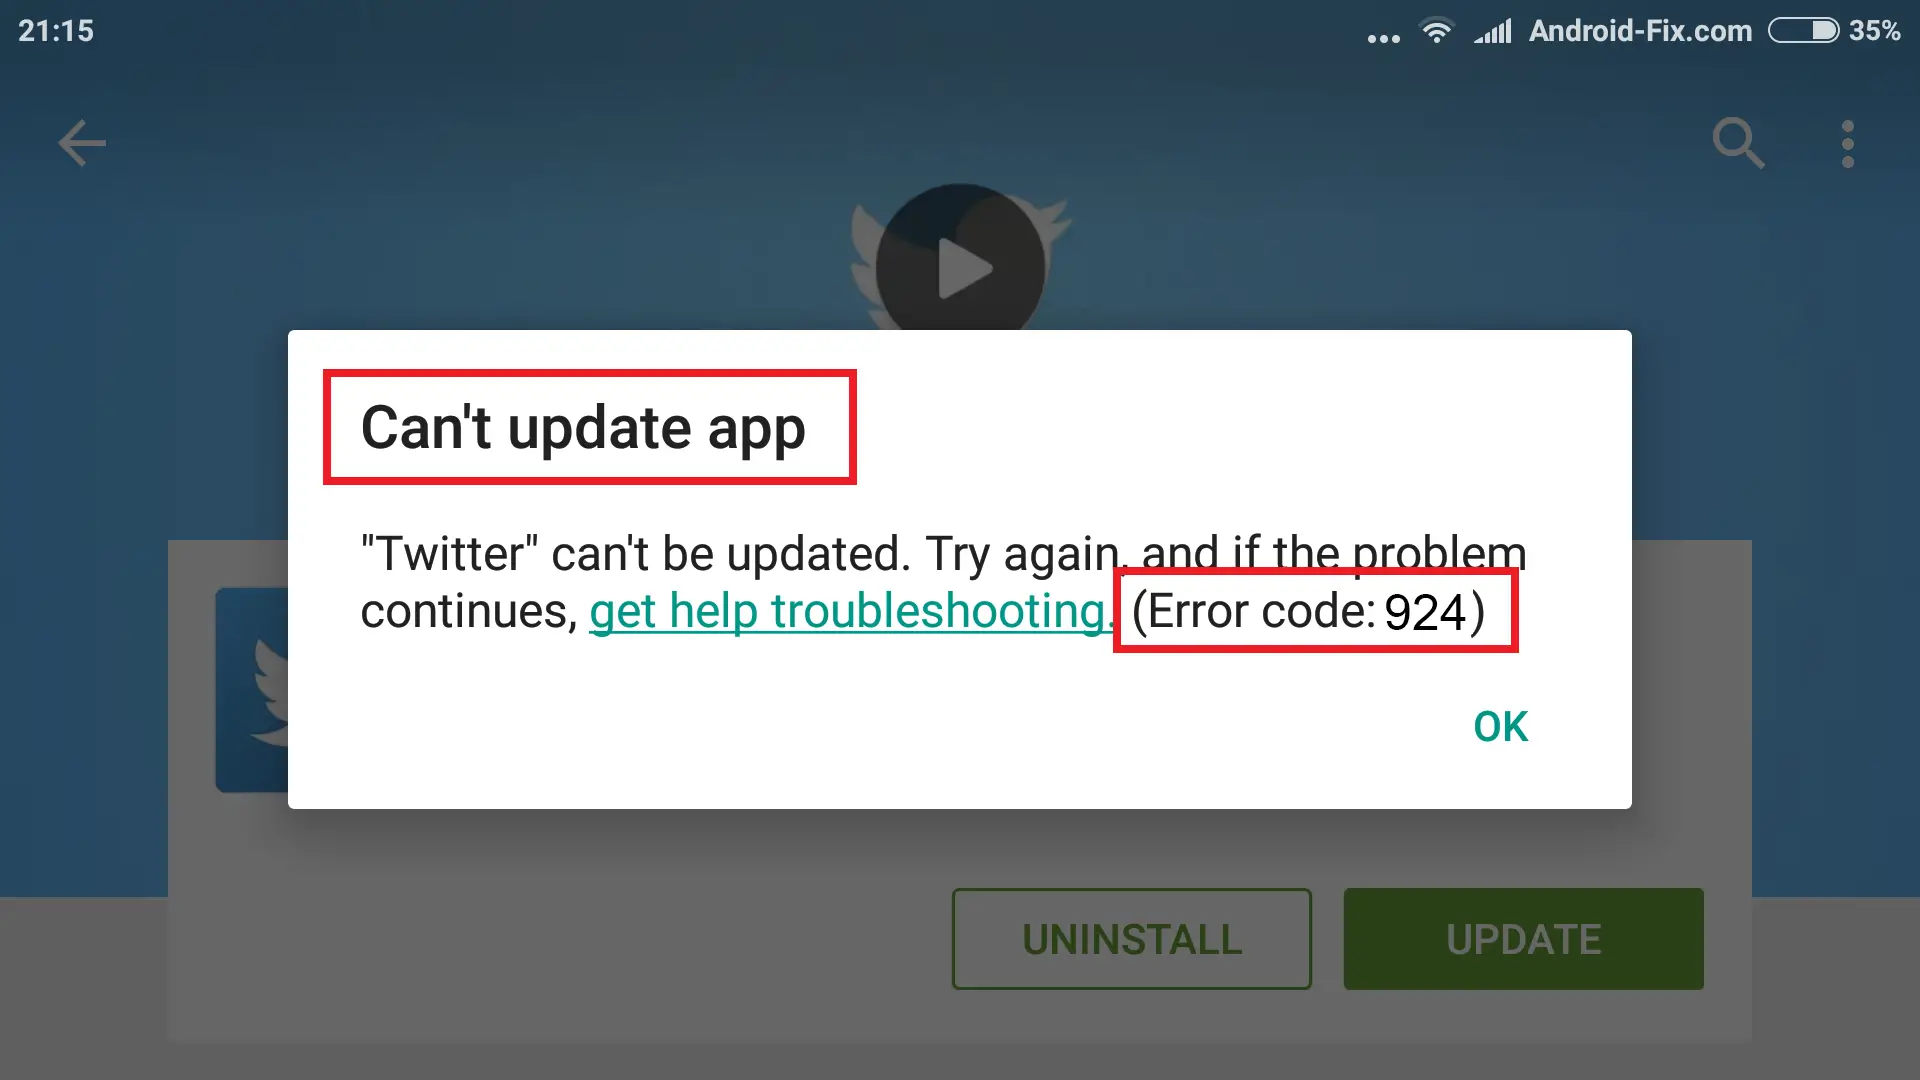 Error Code 924 On Google Play Store